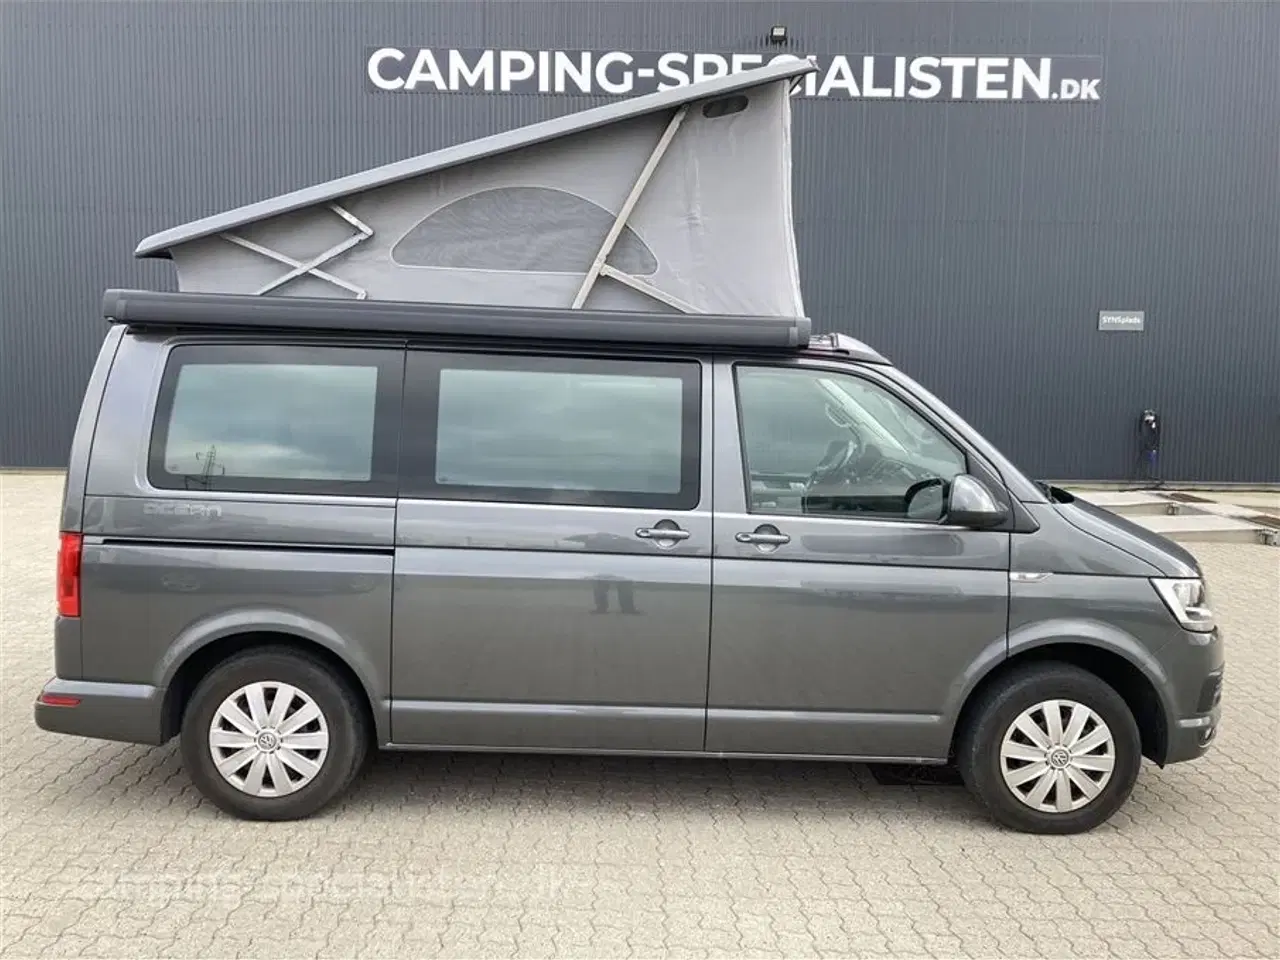 Billede 2 - 2019 - VW California Ocean   VW Ocean meget velholdt model 2019 kan snart ses Hos Camping-Specialisten.dk